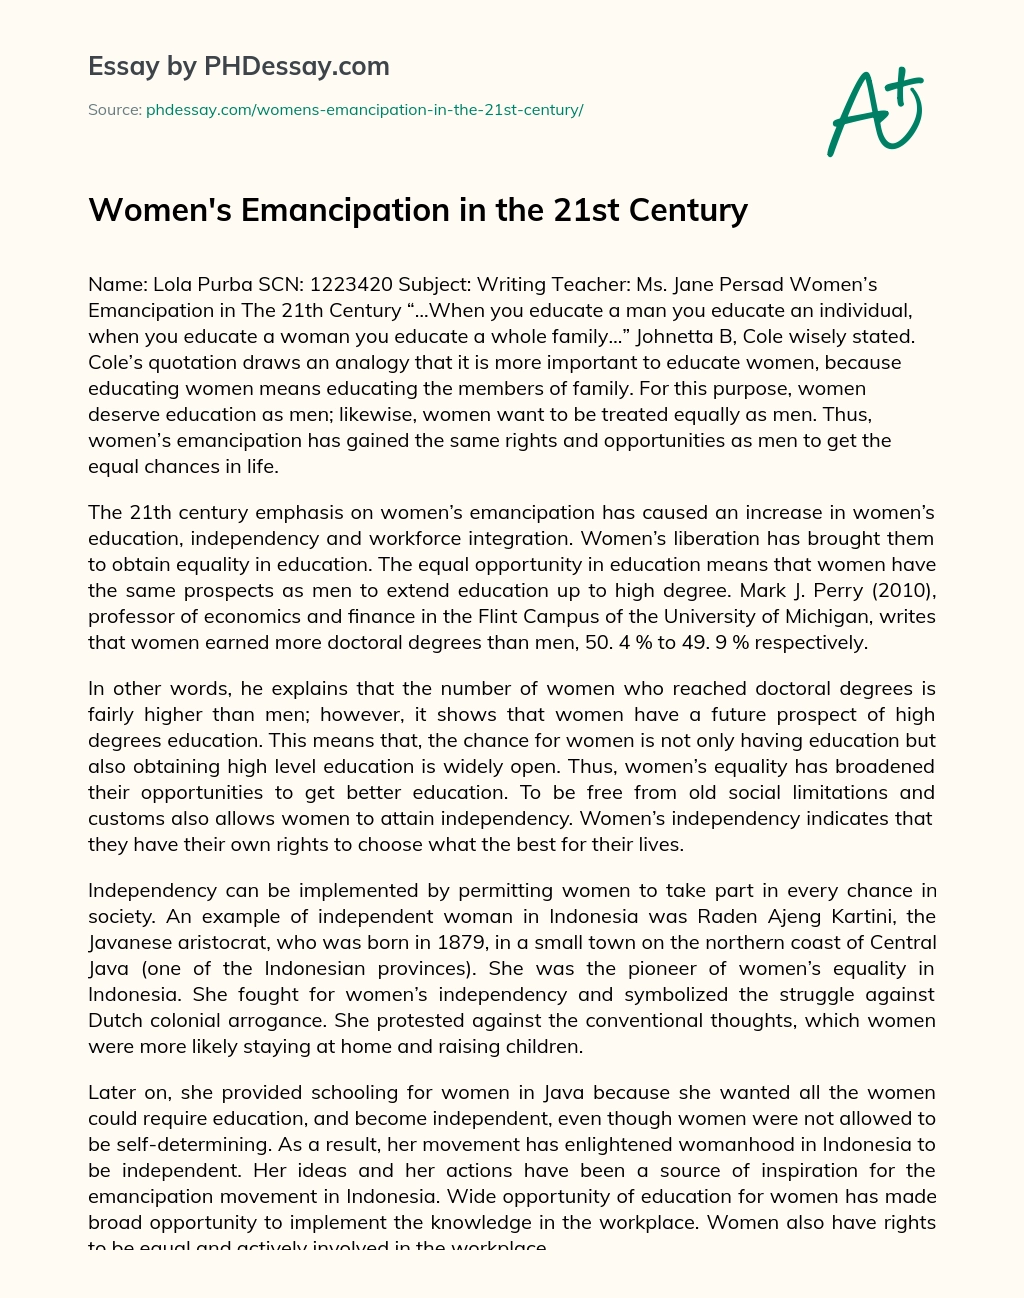 Women’s Emancipation in the 21st Century essay